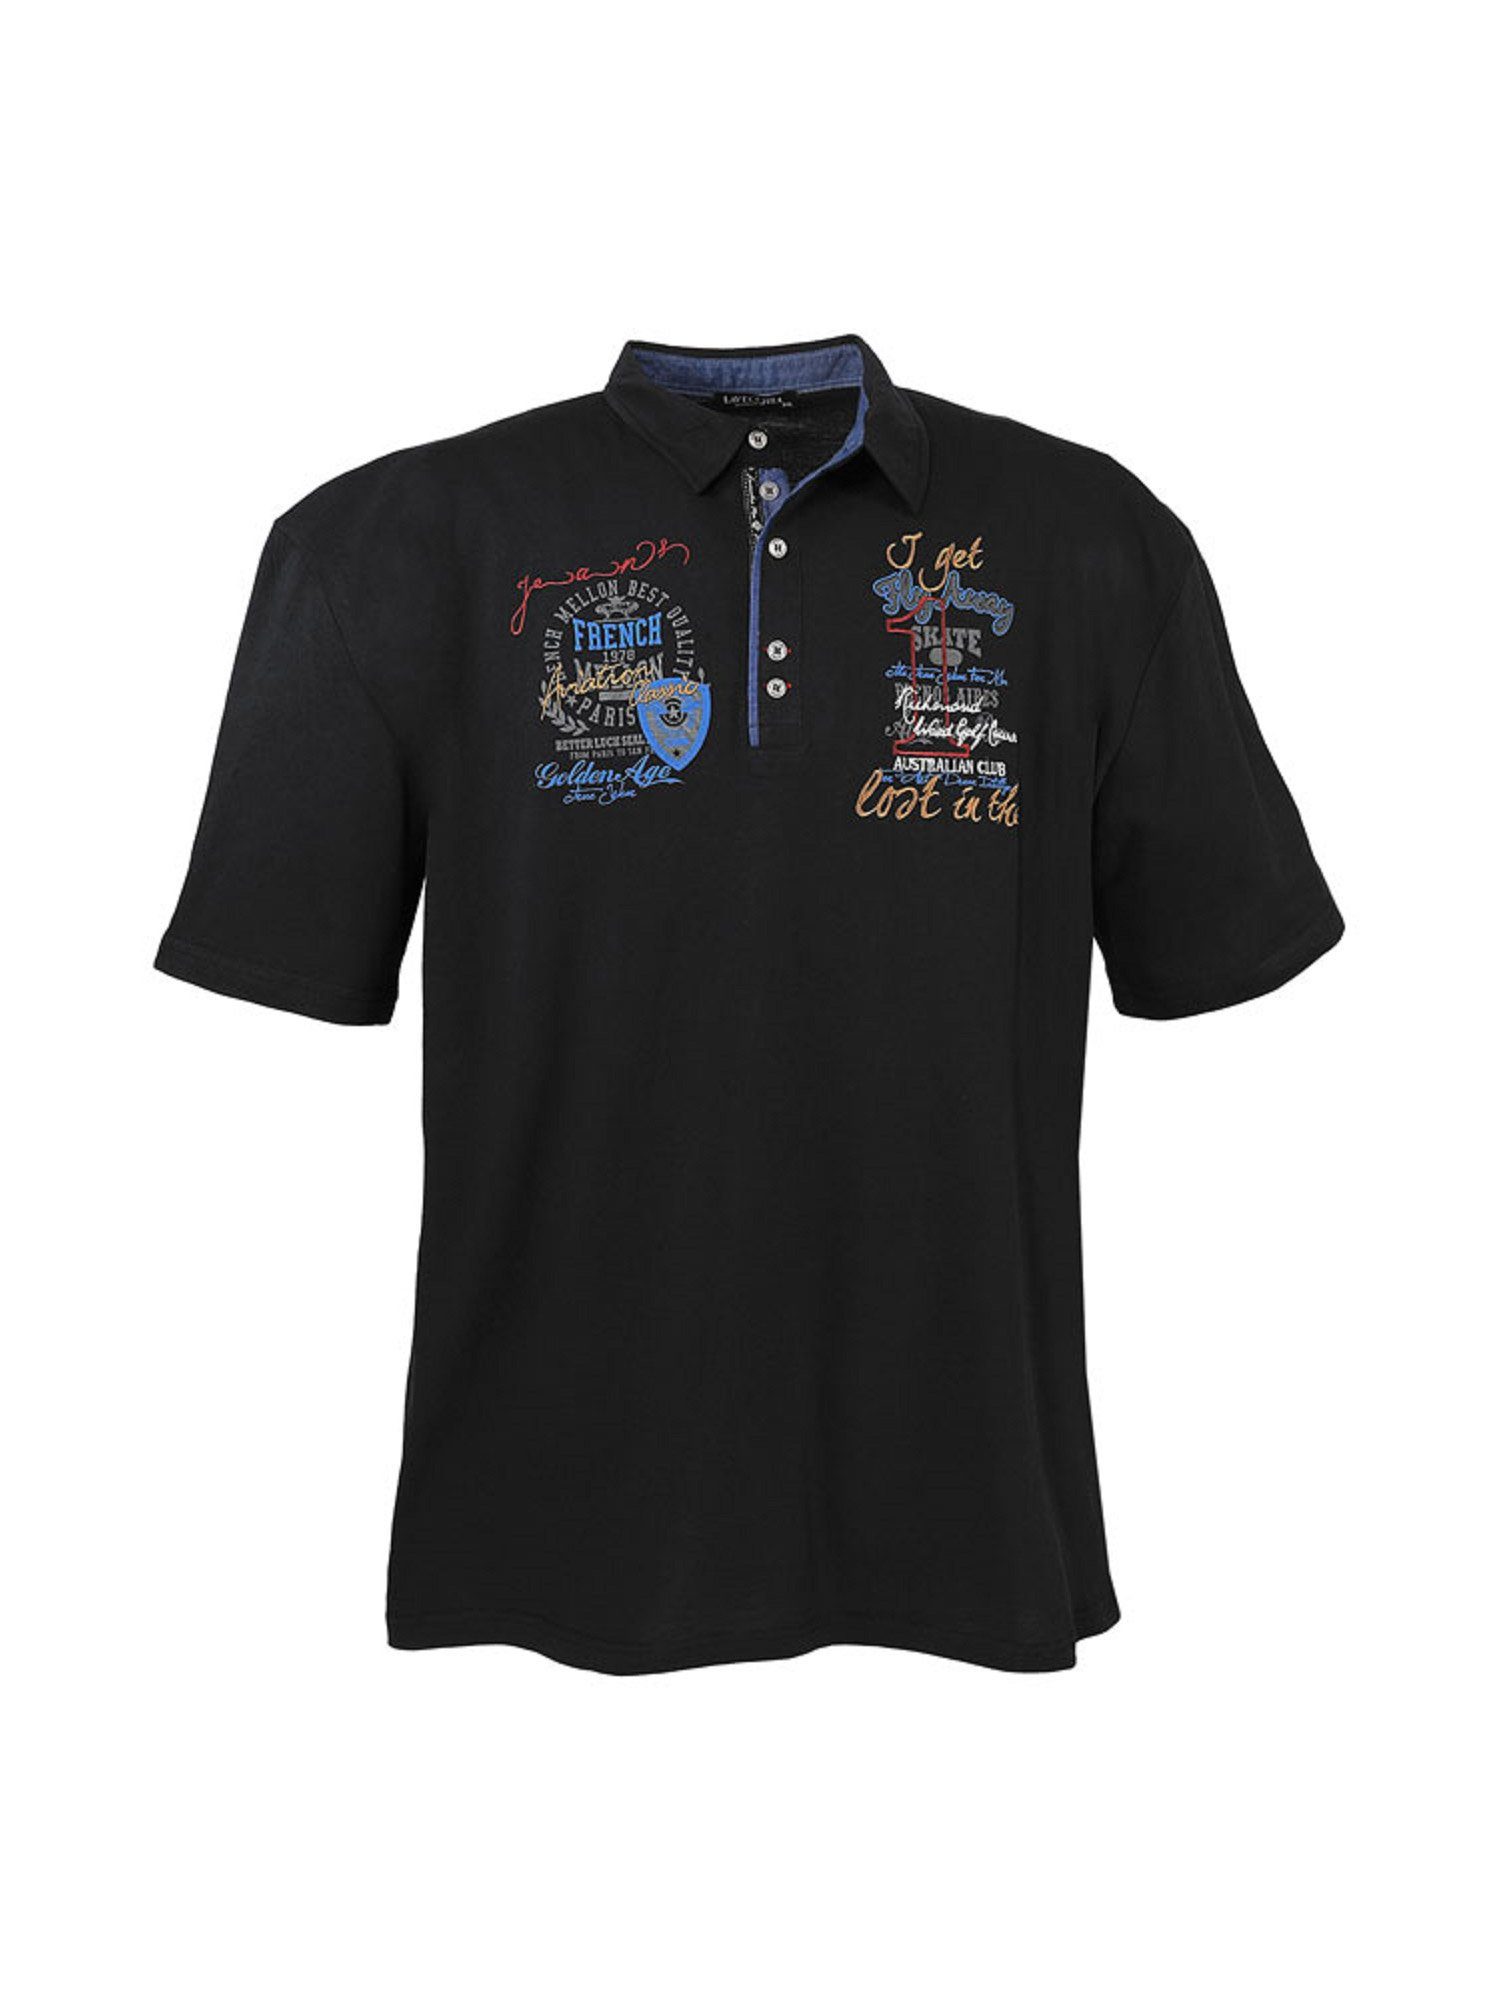 Herren LV-3101 Shirt Lavecchia Polo schwarz Übergrößen Shirt Poloshirt Polo Herren